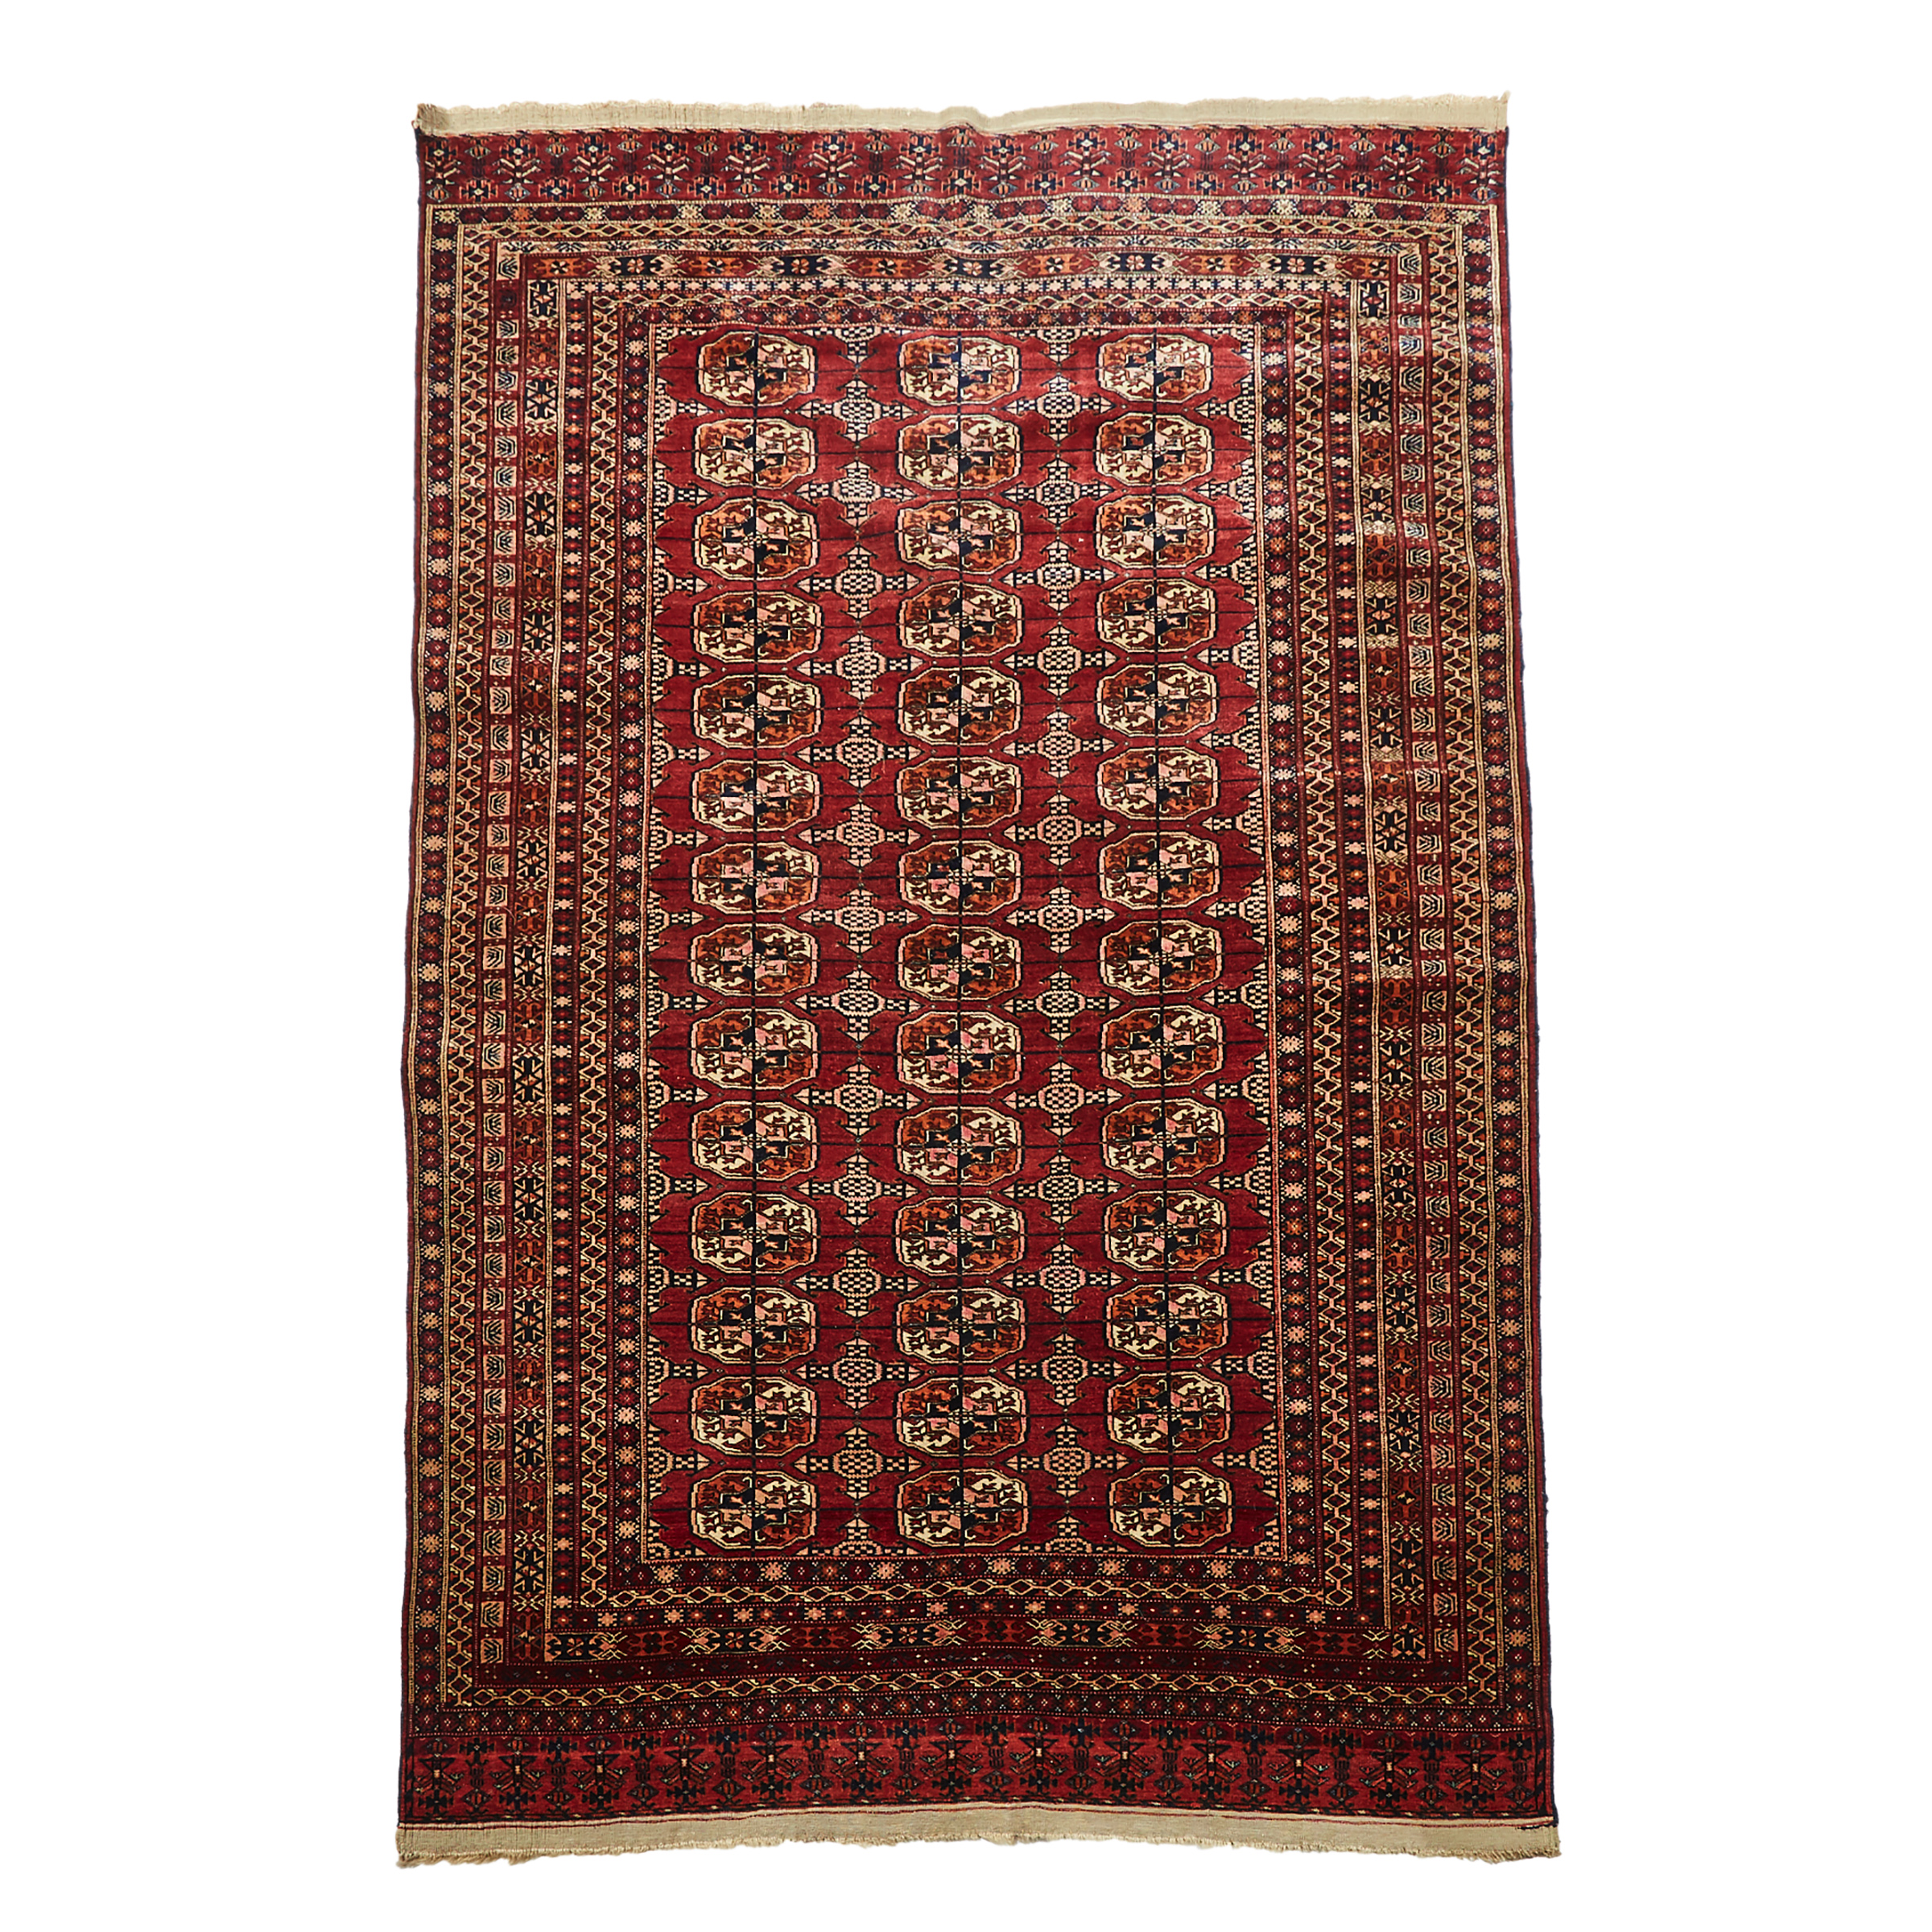 Turkoman Main Carpet, Central Asia, mid 20th century